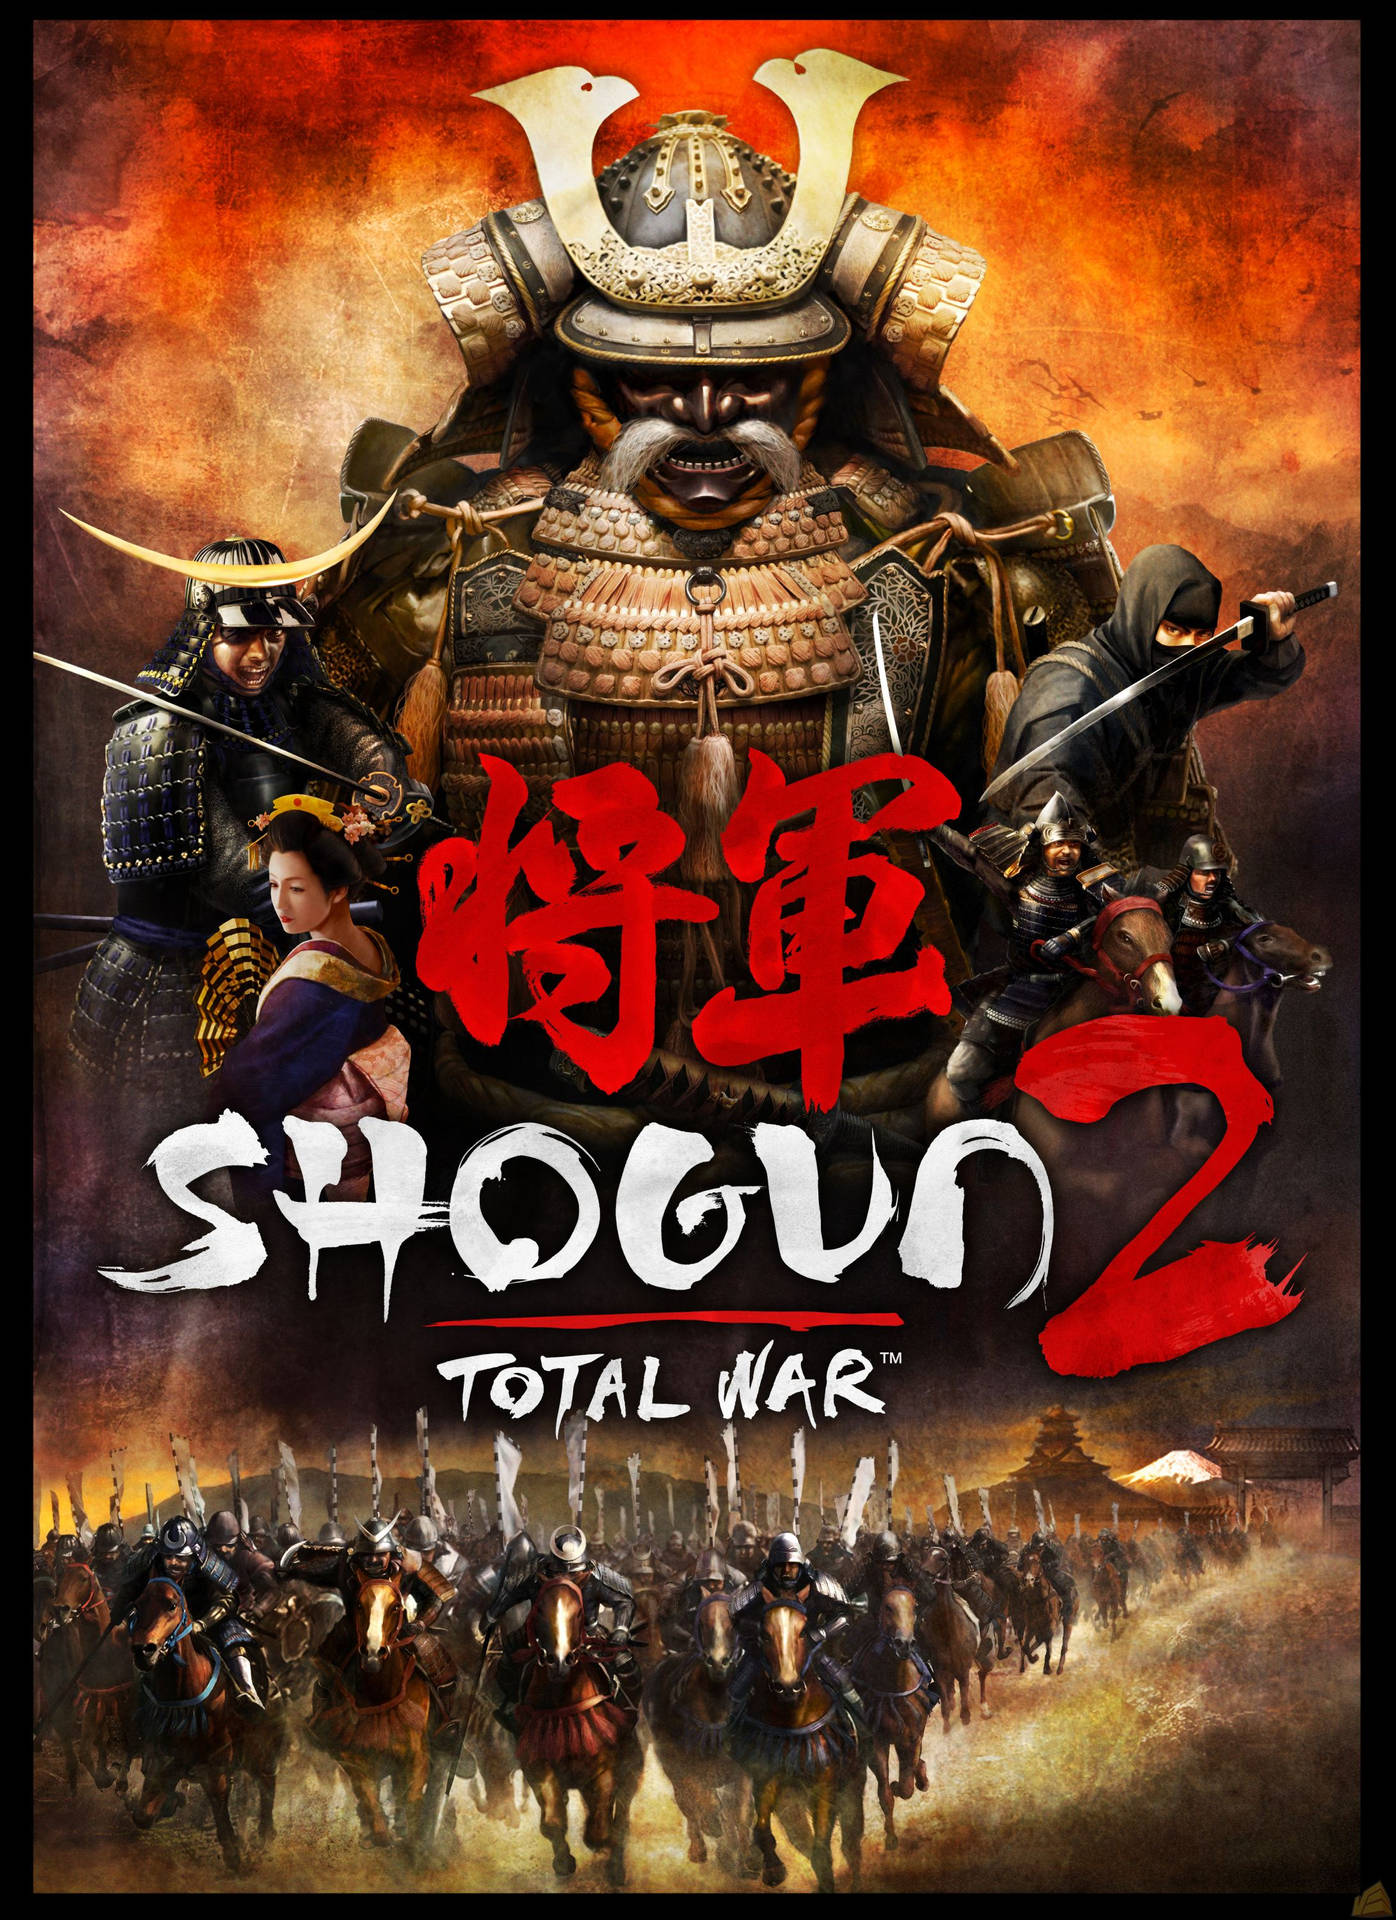 Shogun 2 Total War Game Poster Background